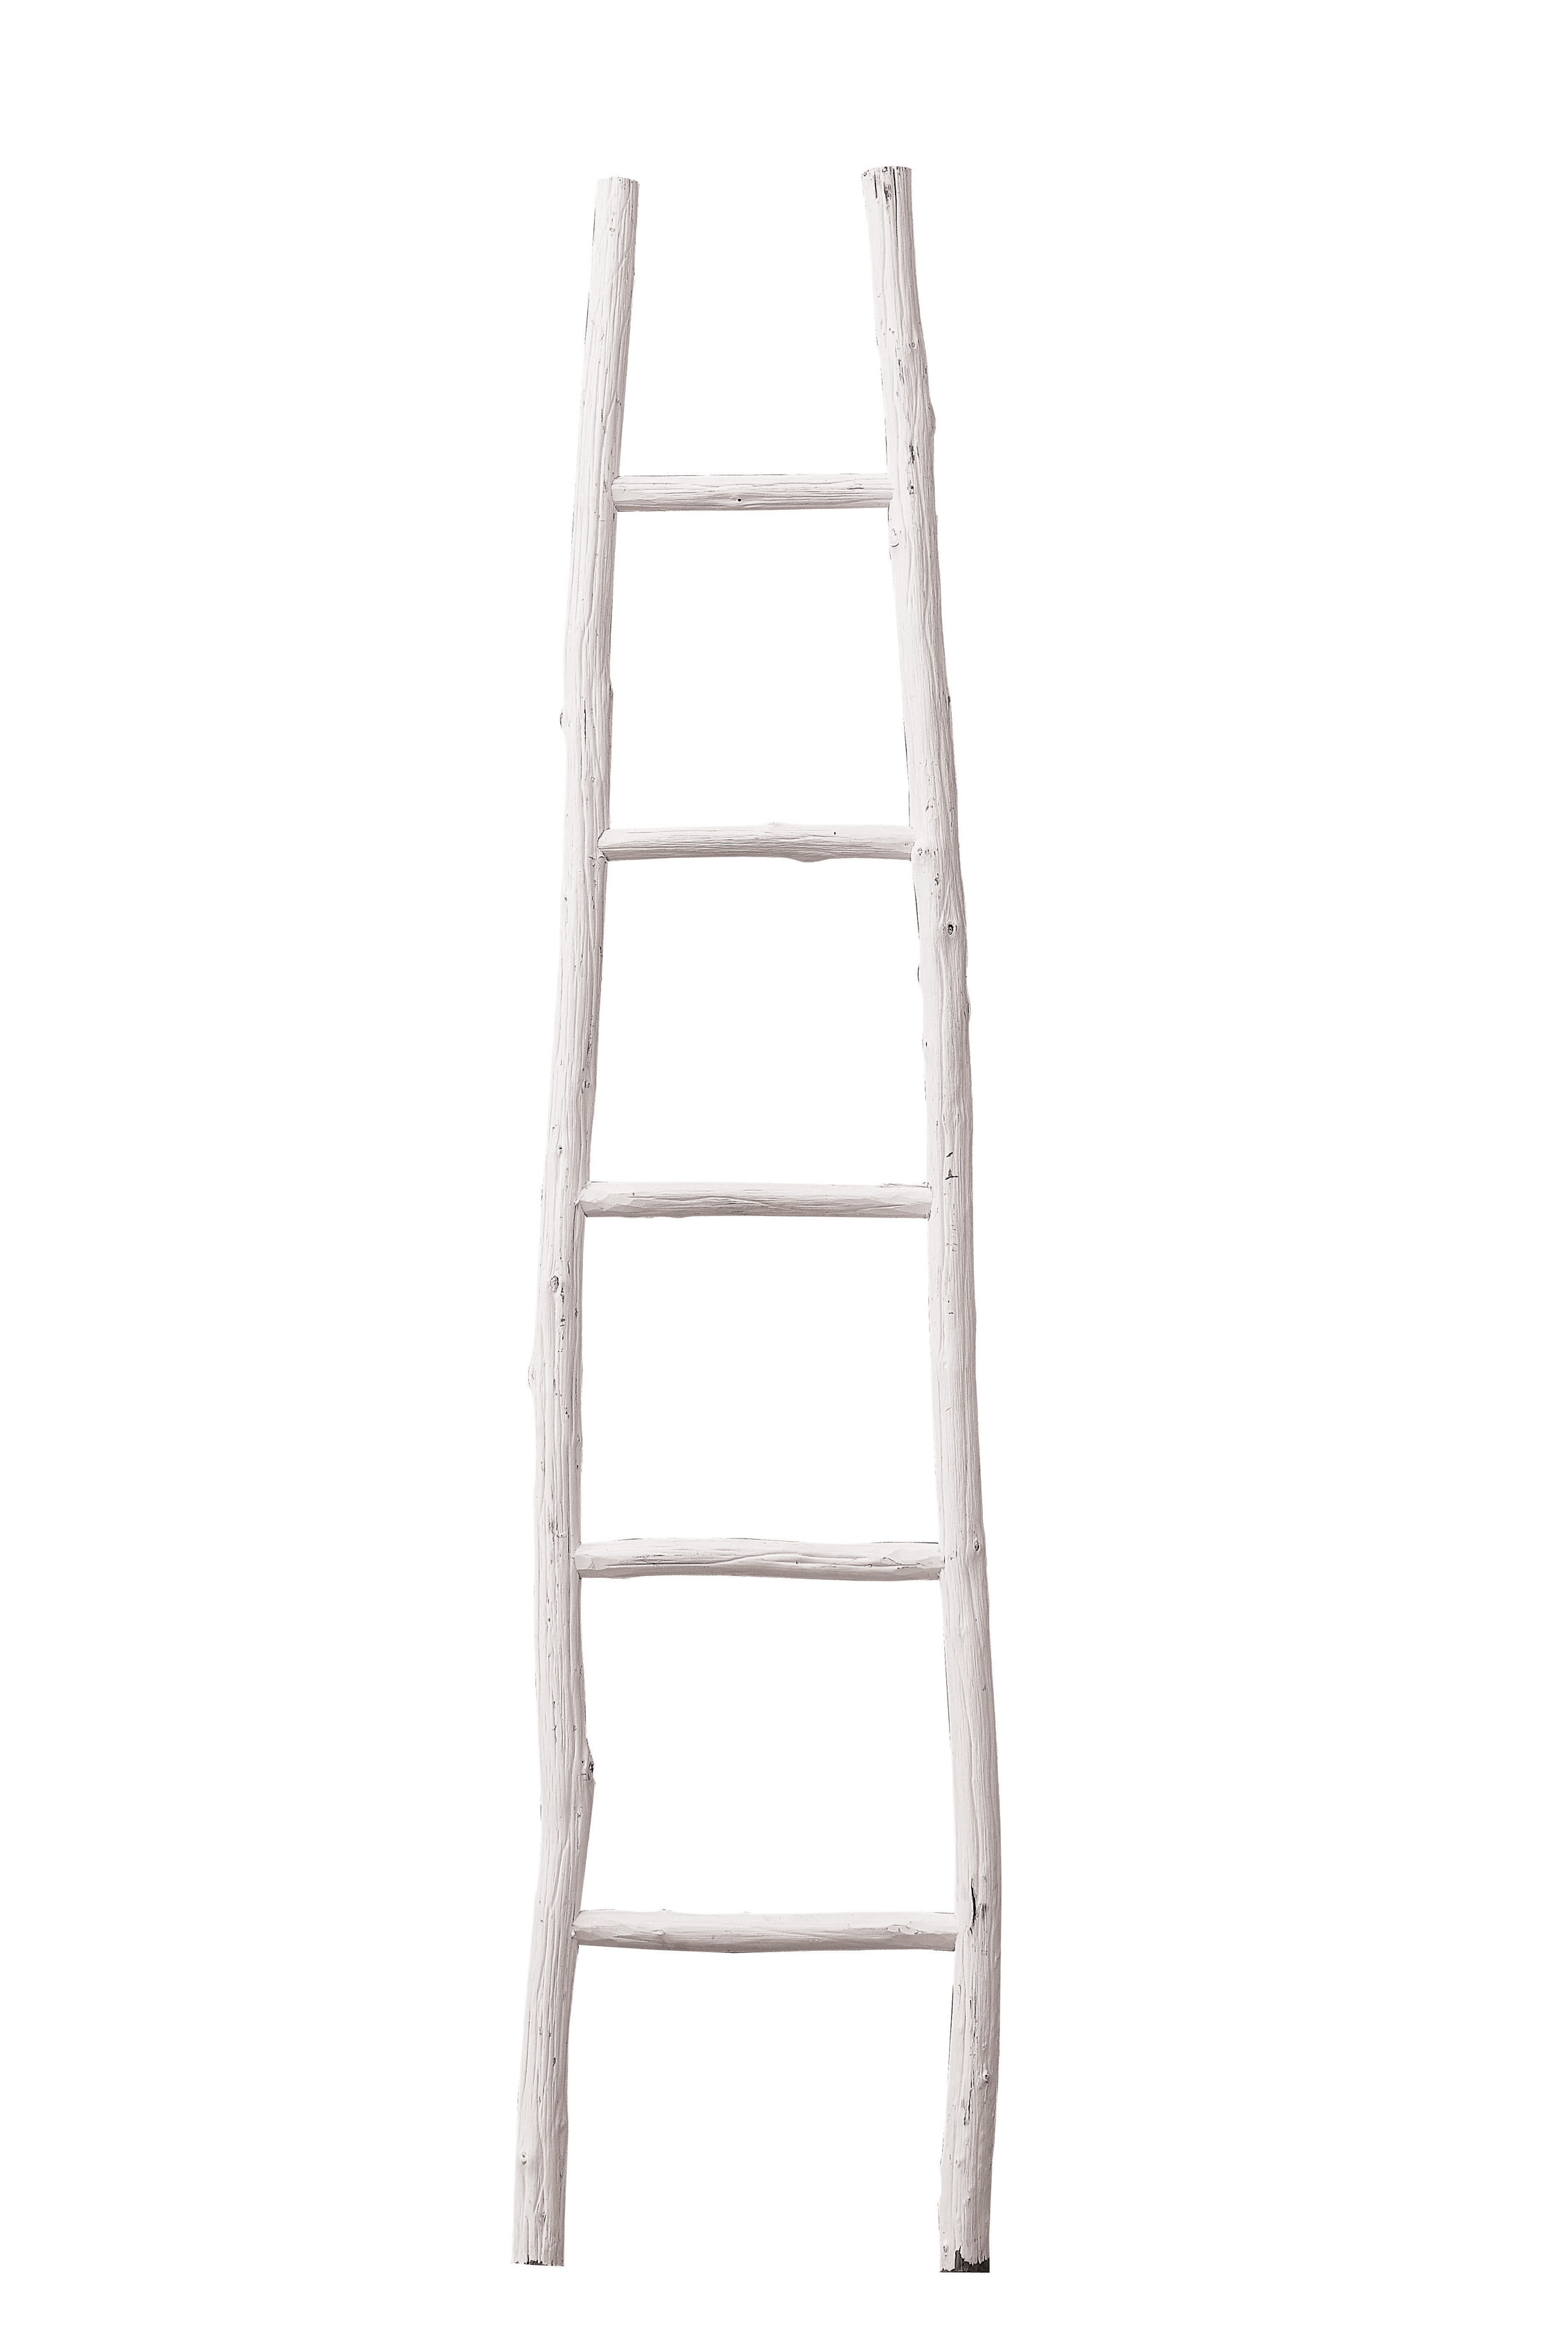 70"H Decorative Painted Wood Ladder - Image 0